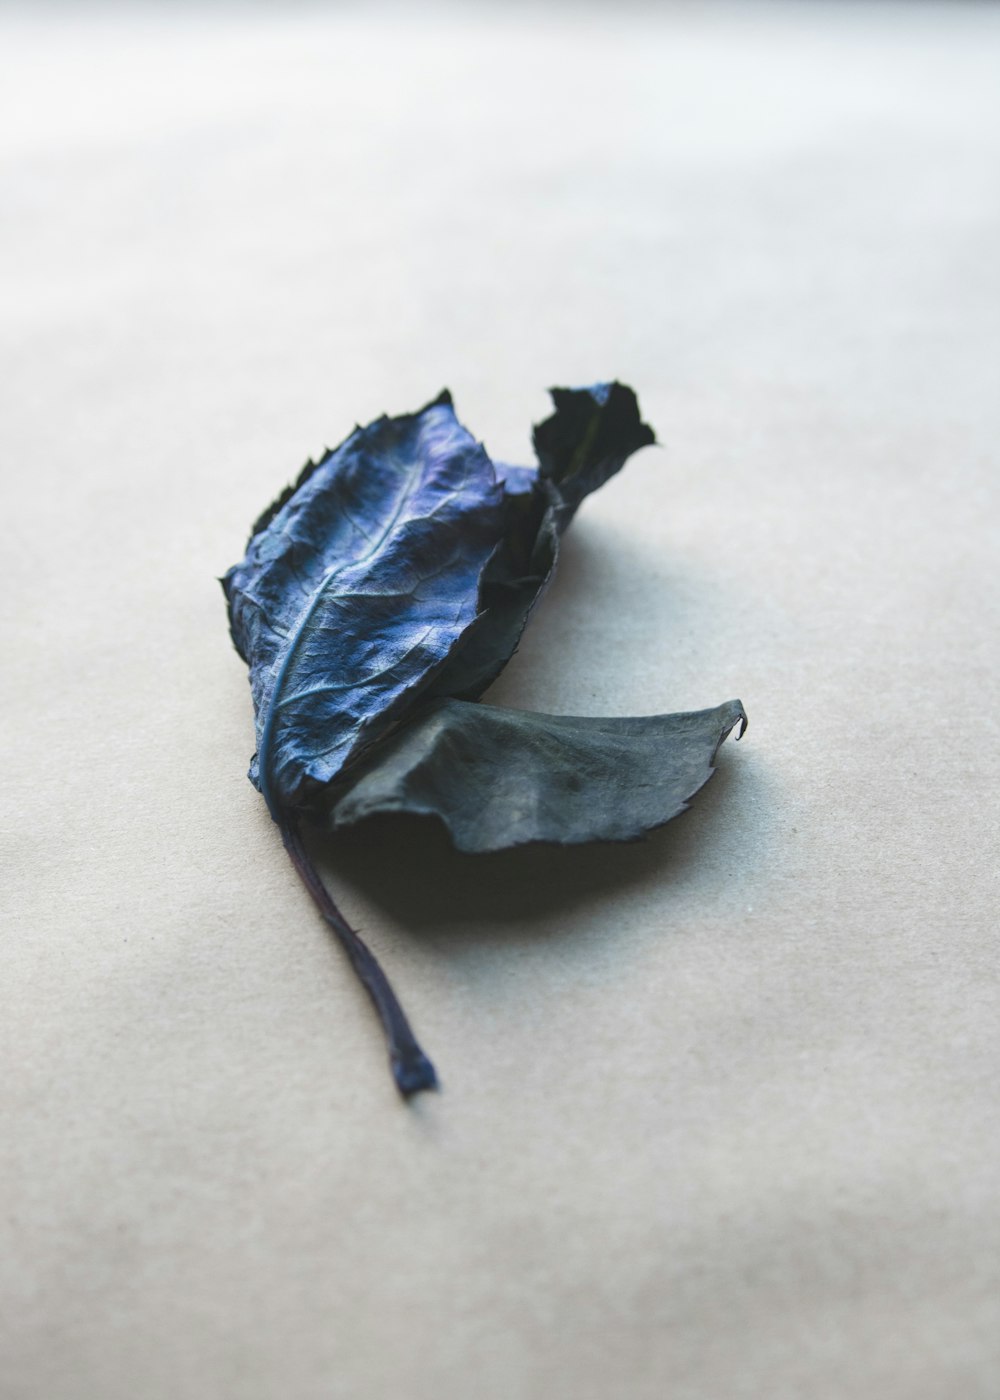 blue leaf on white surface